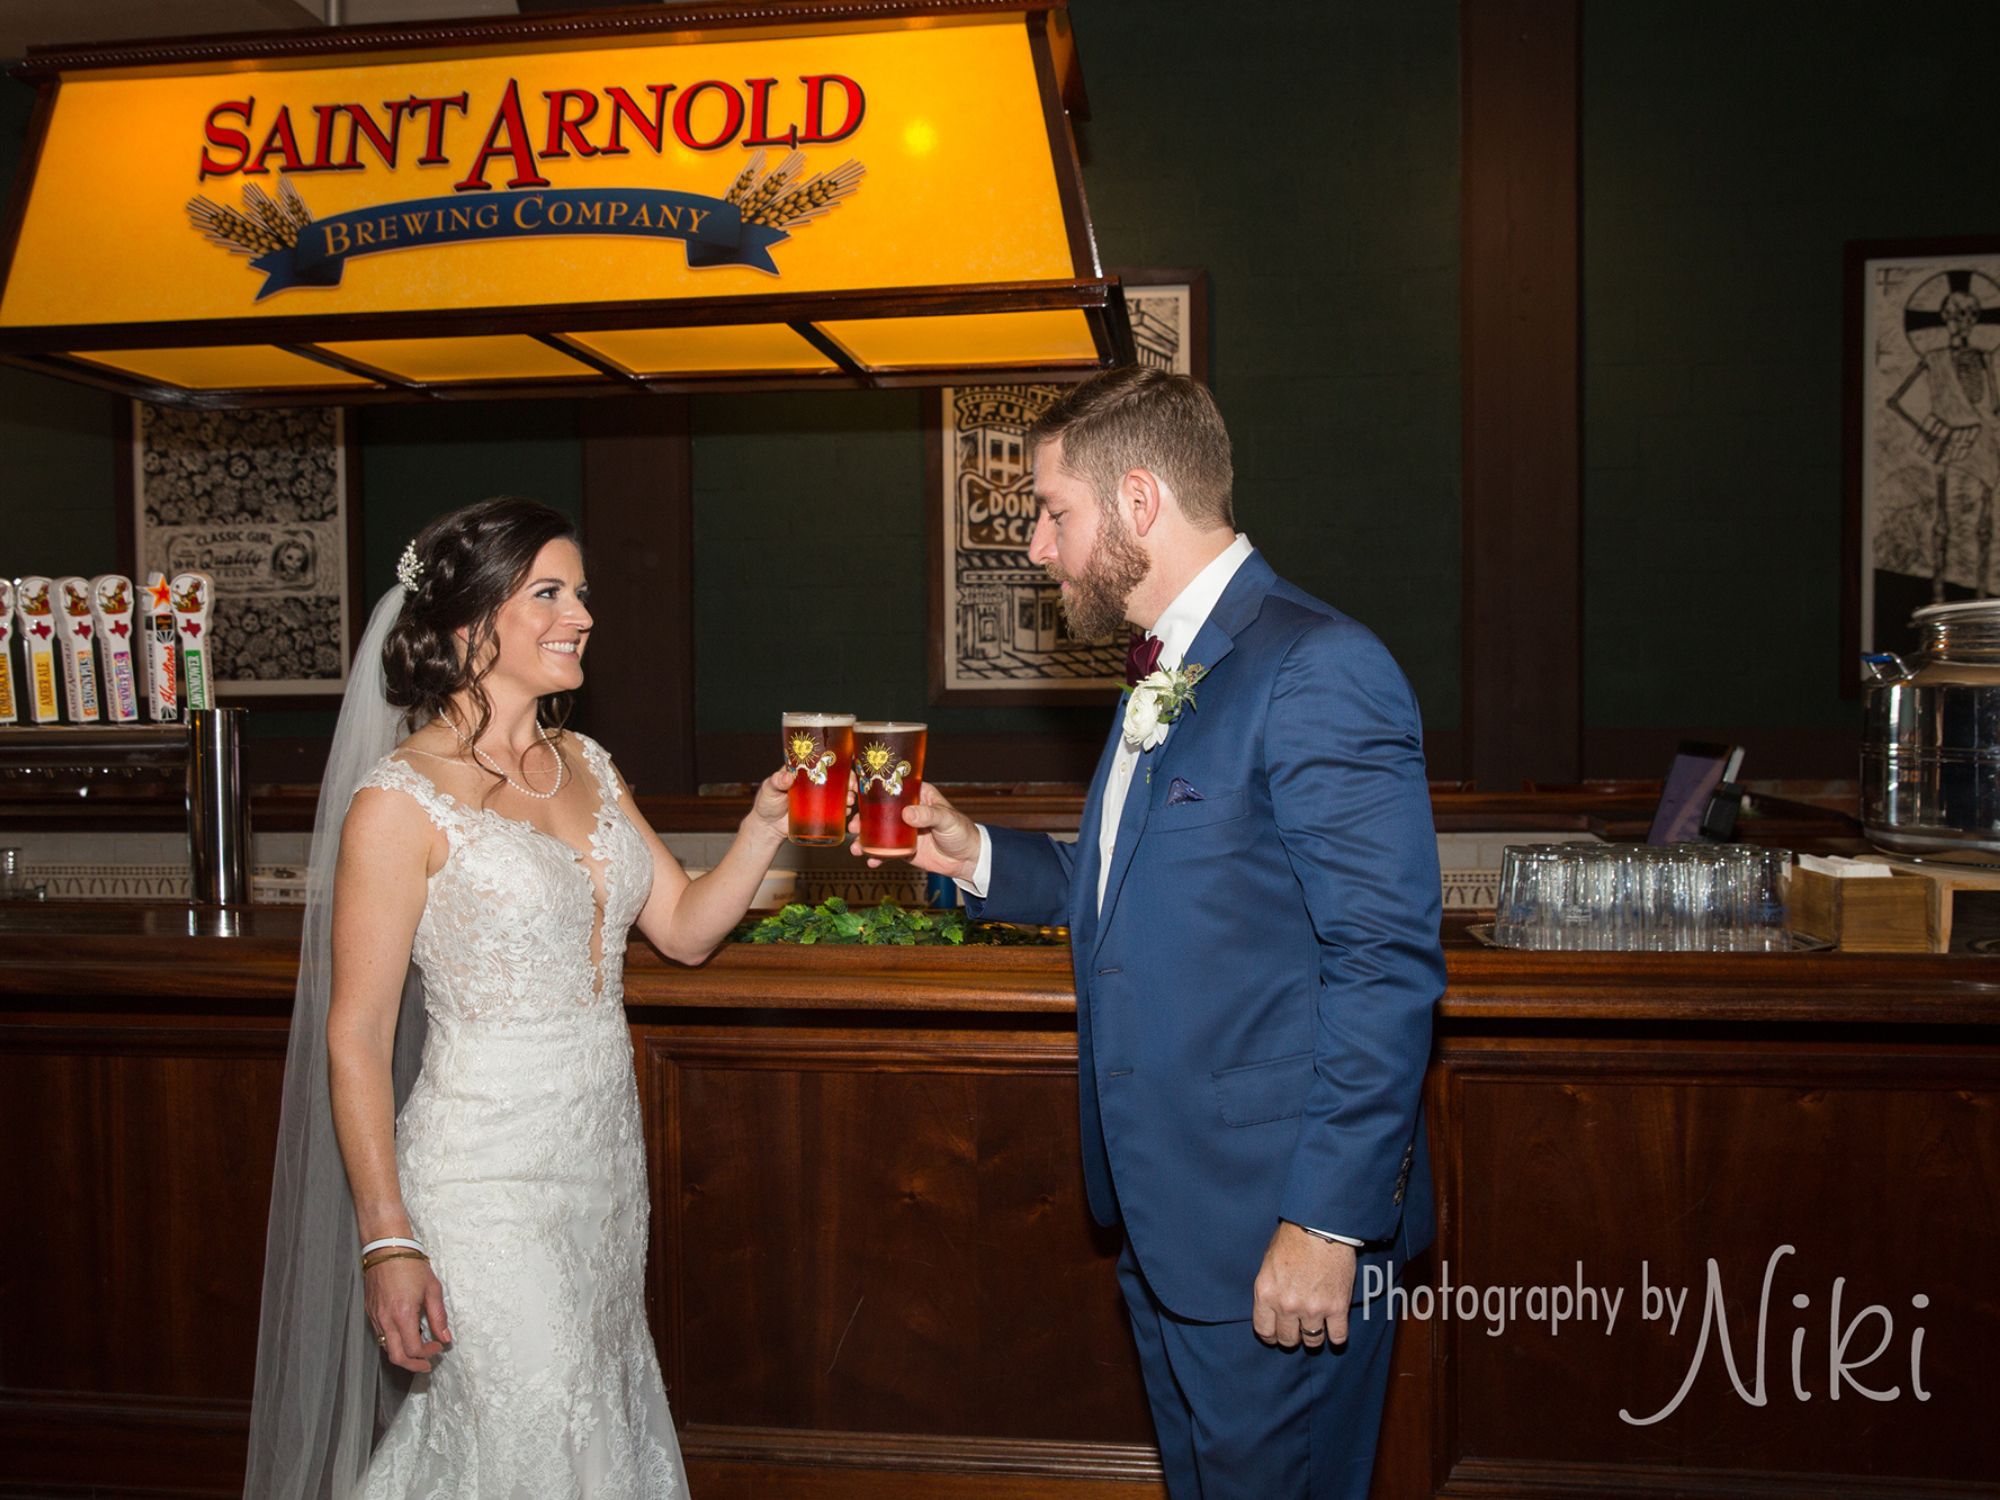 Houston Wedding Venue - Saint Arnold Brewing Co.